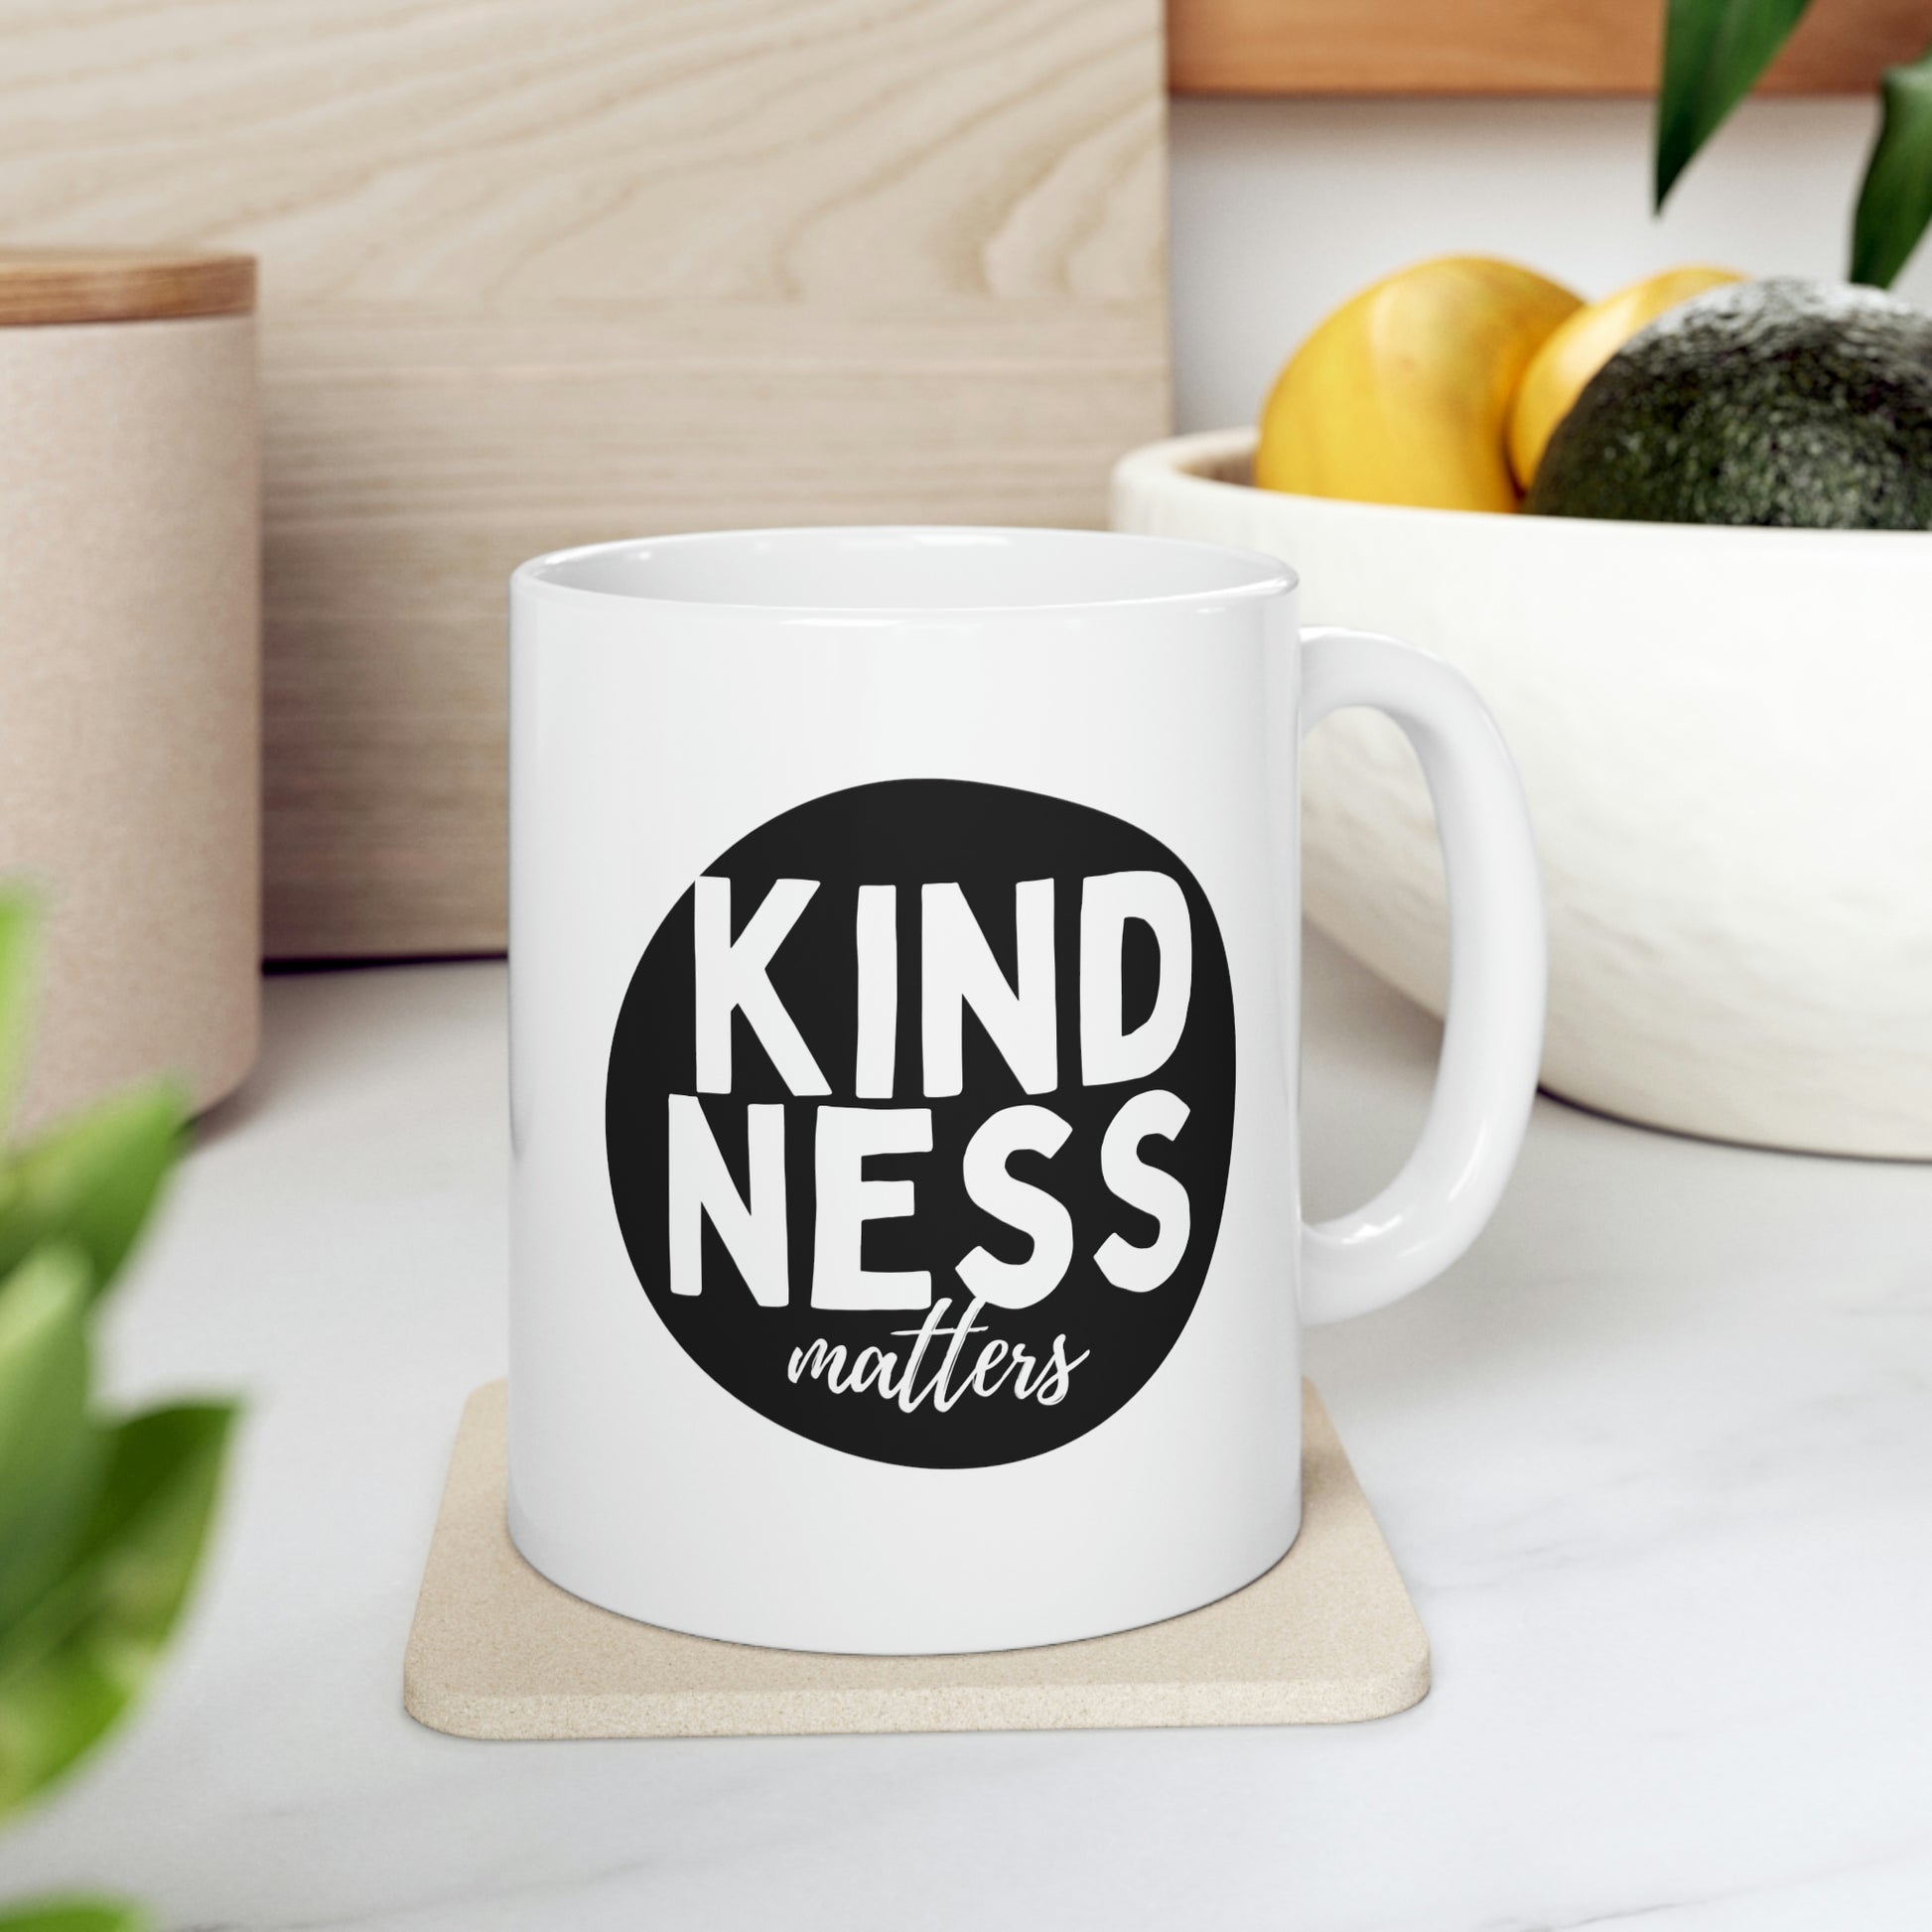 Kindness Matters Coffee Mug